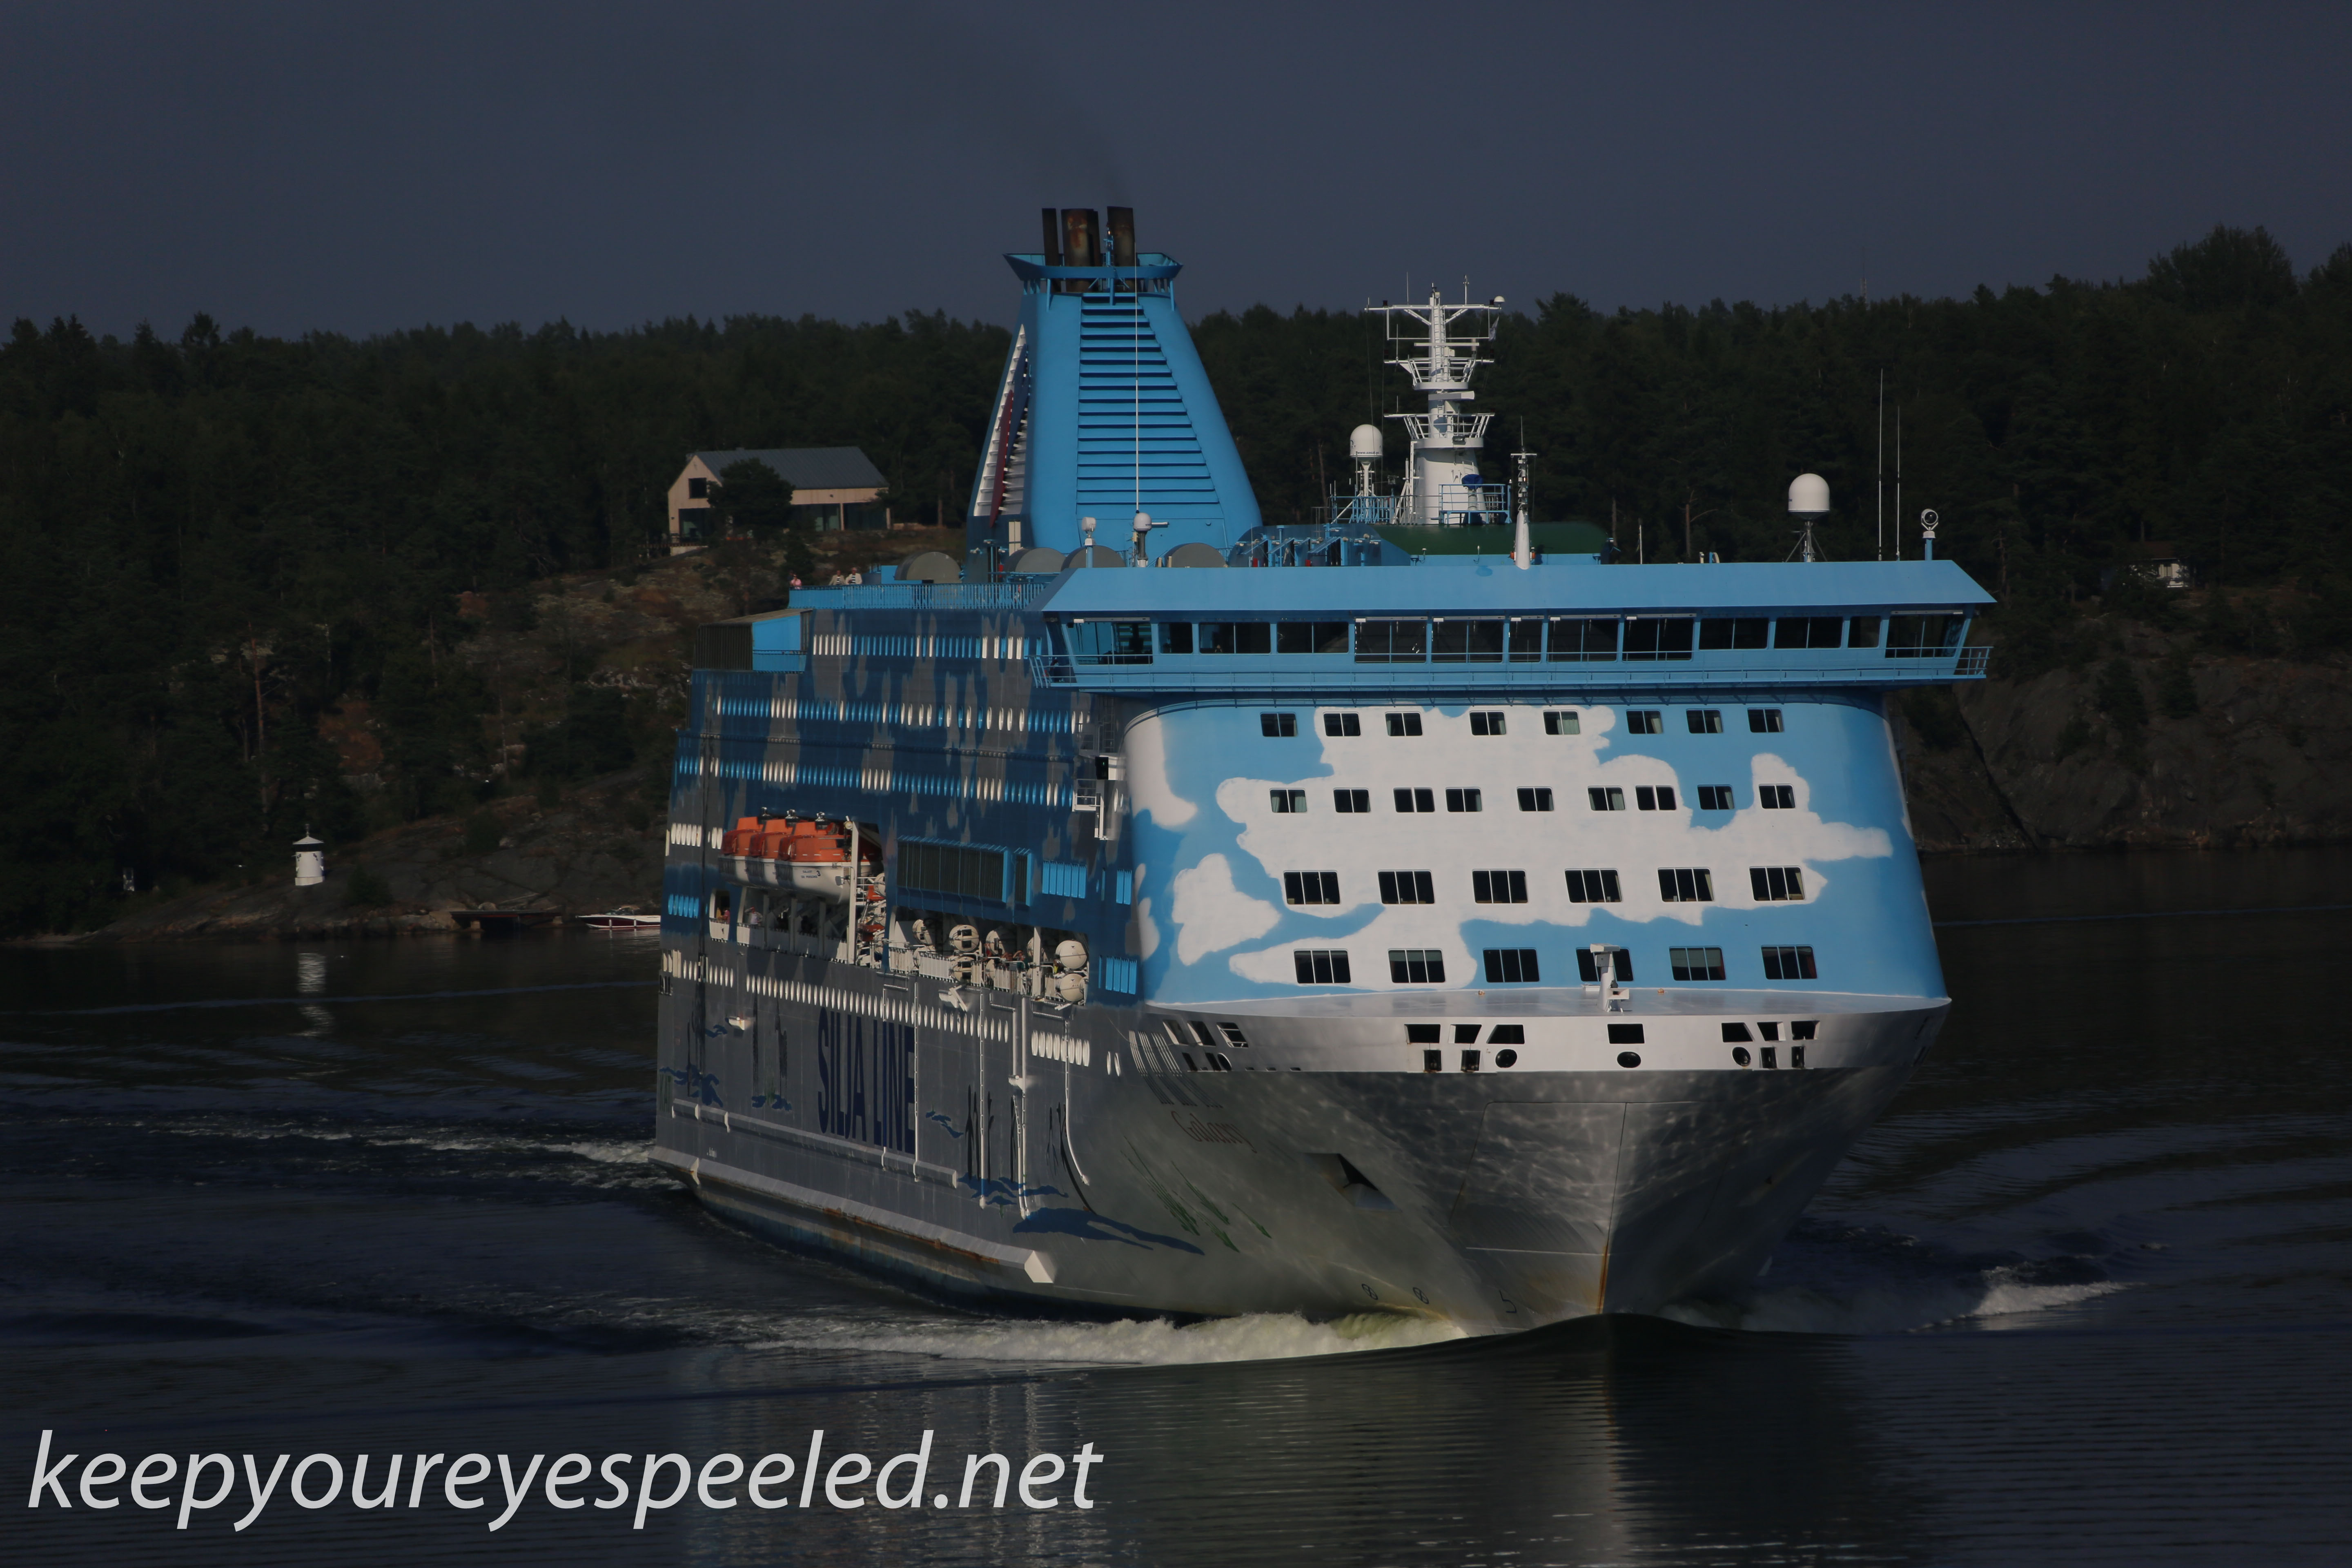 Stockholm to Helsinki deck photos (19 of 27)